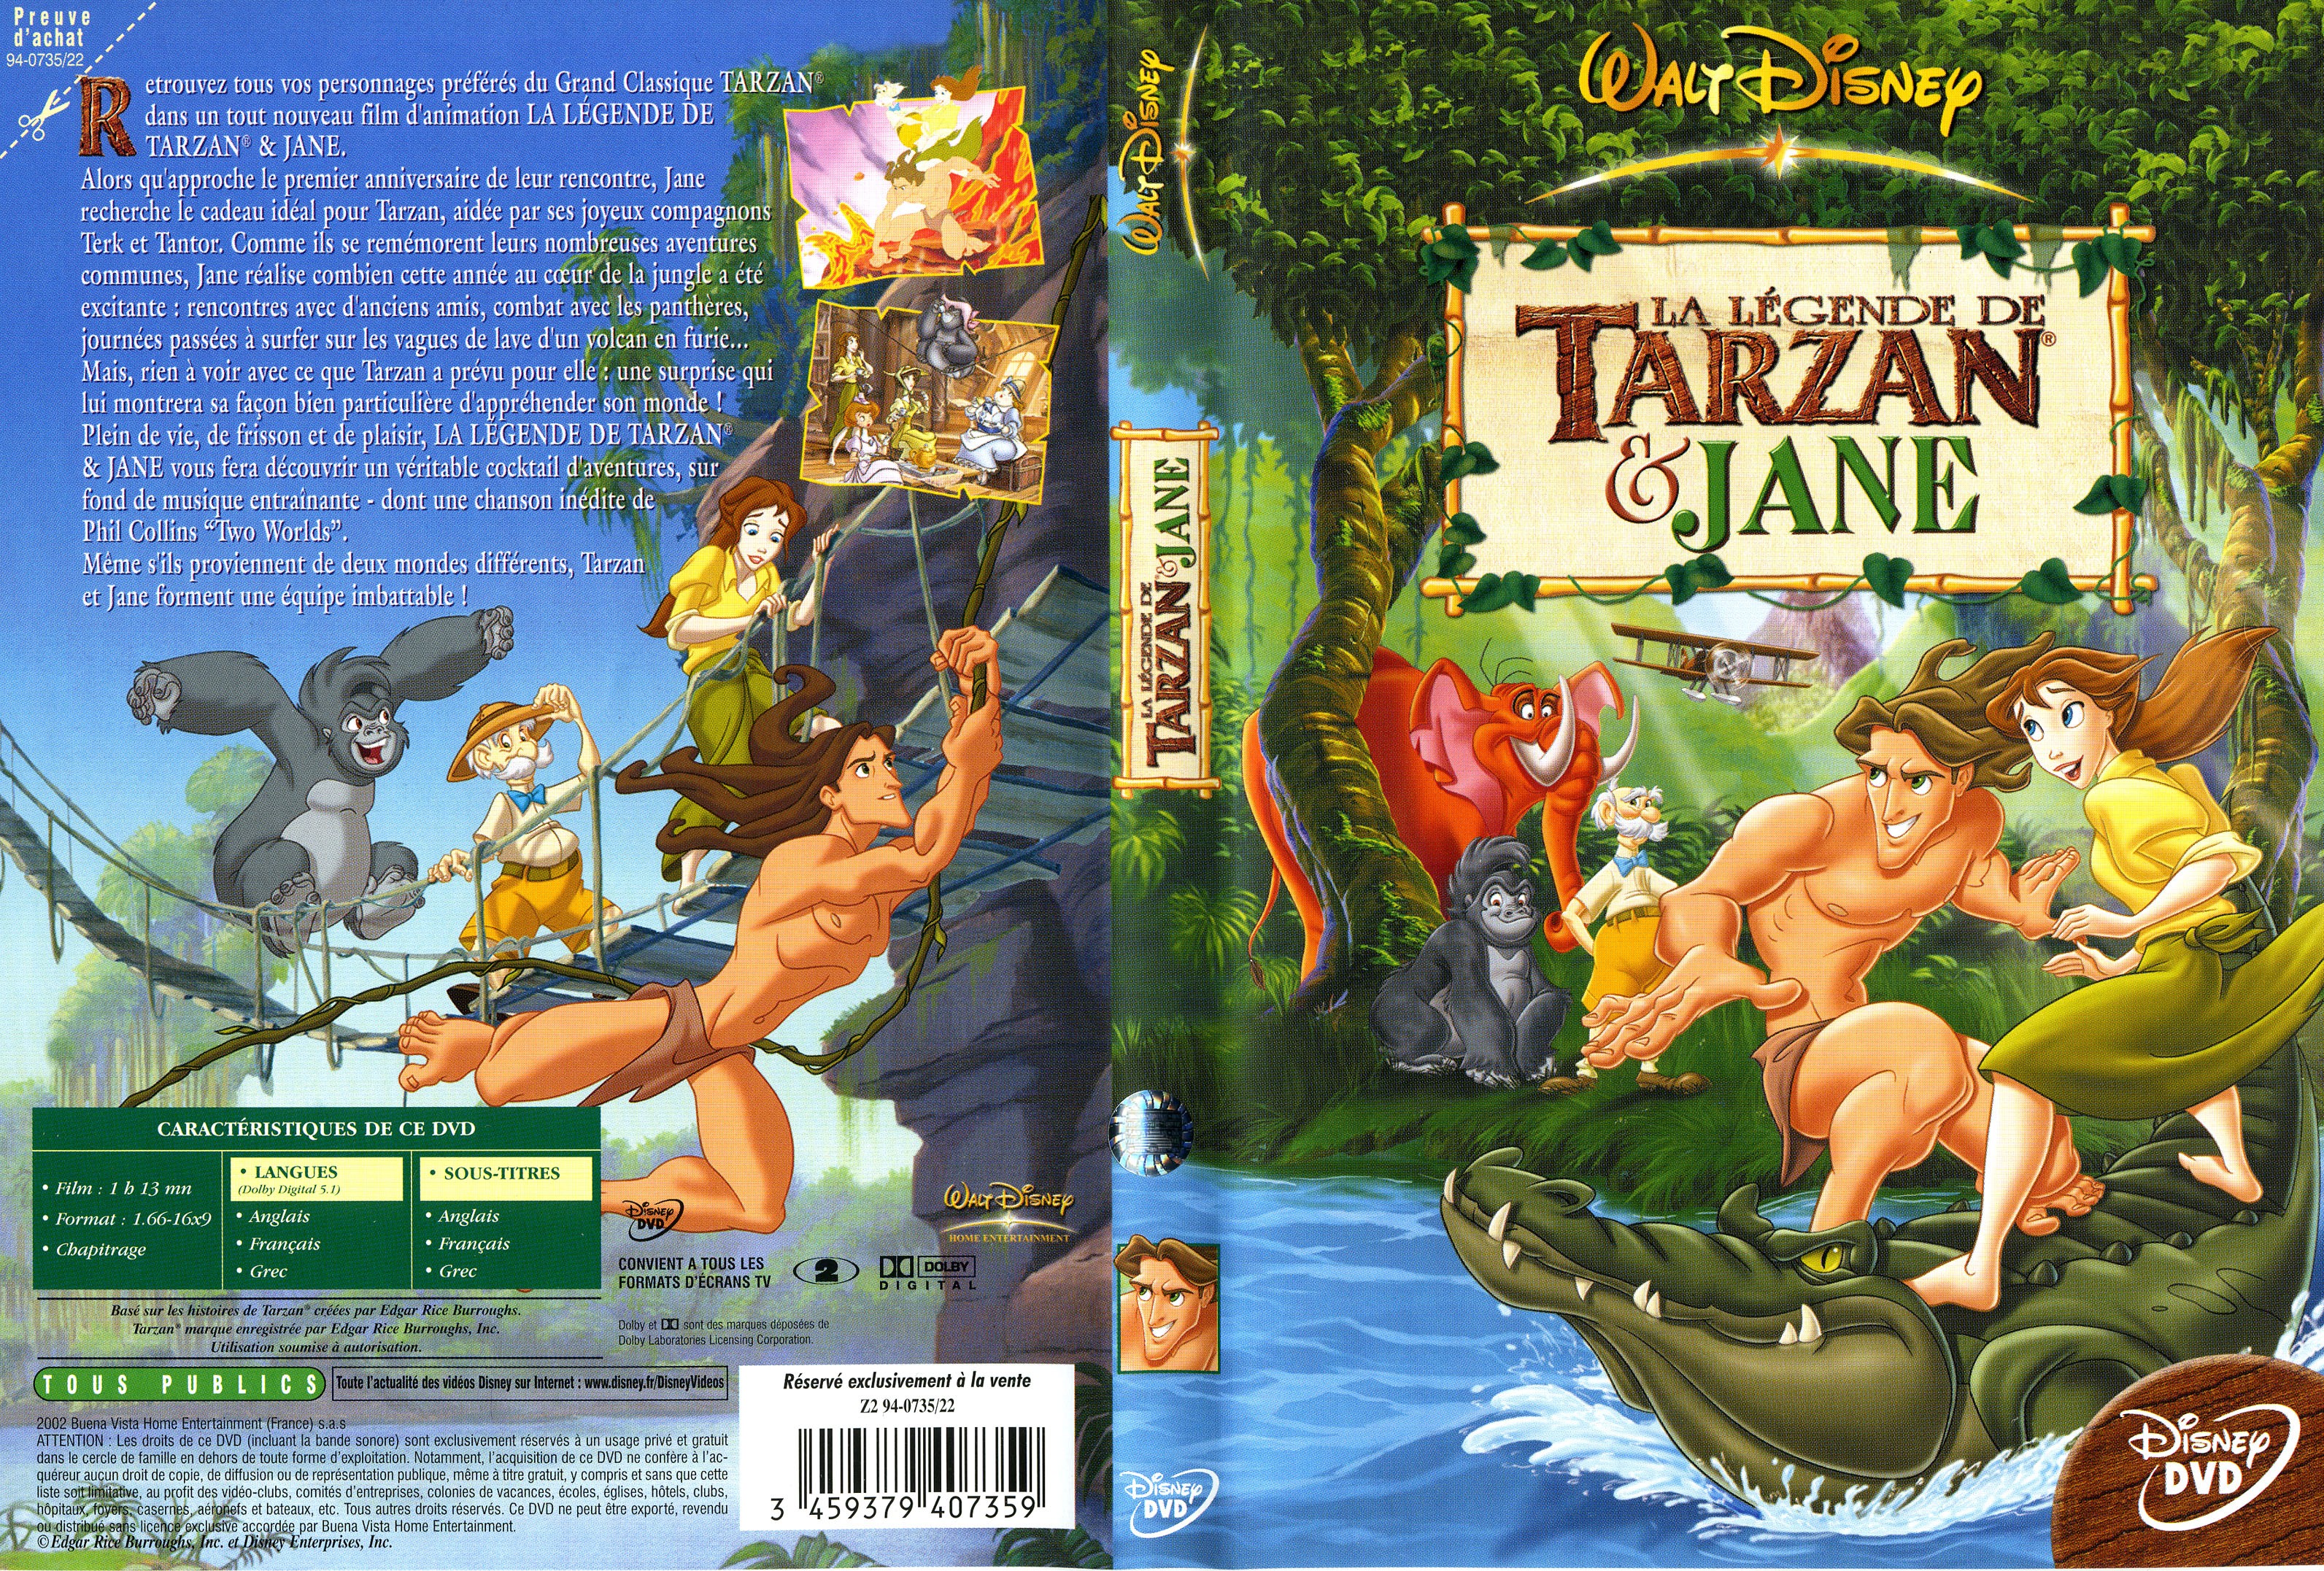 Jaquette DVD La lgende de Tarzan et Jane